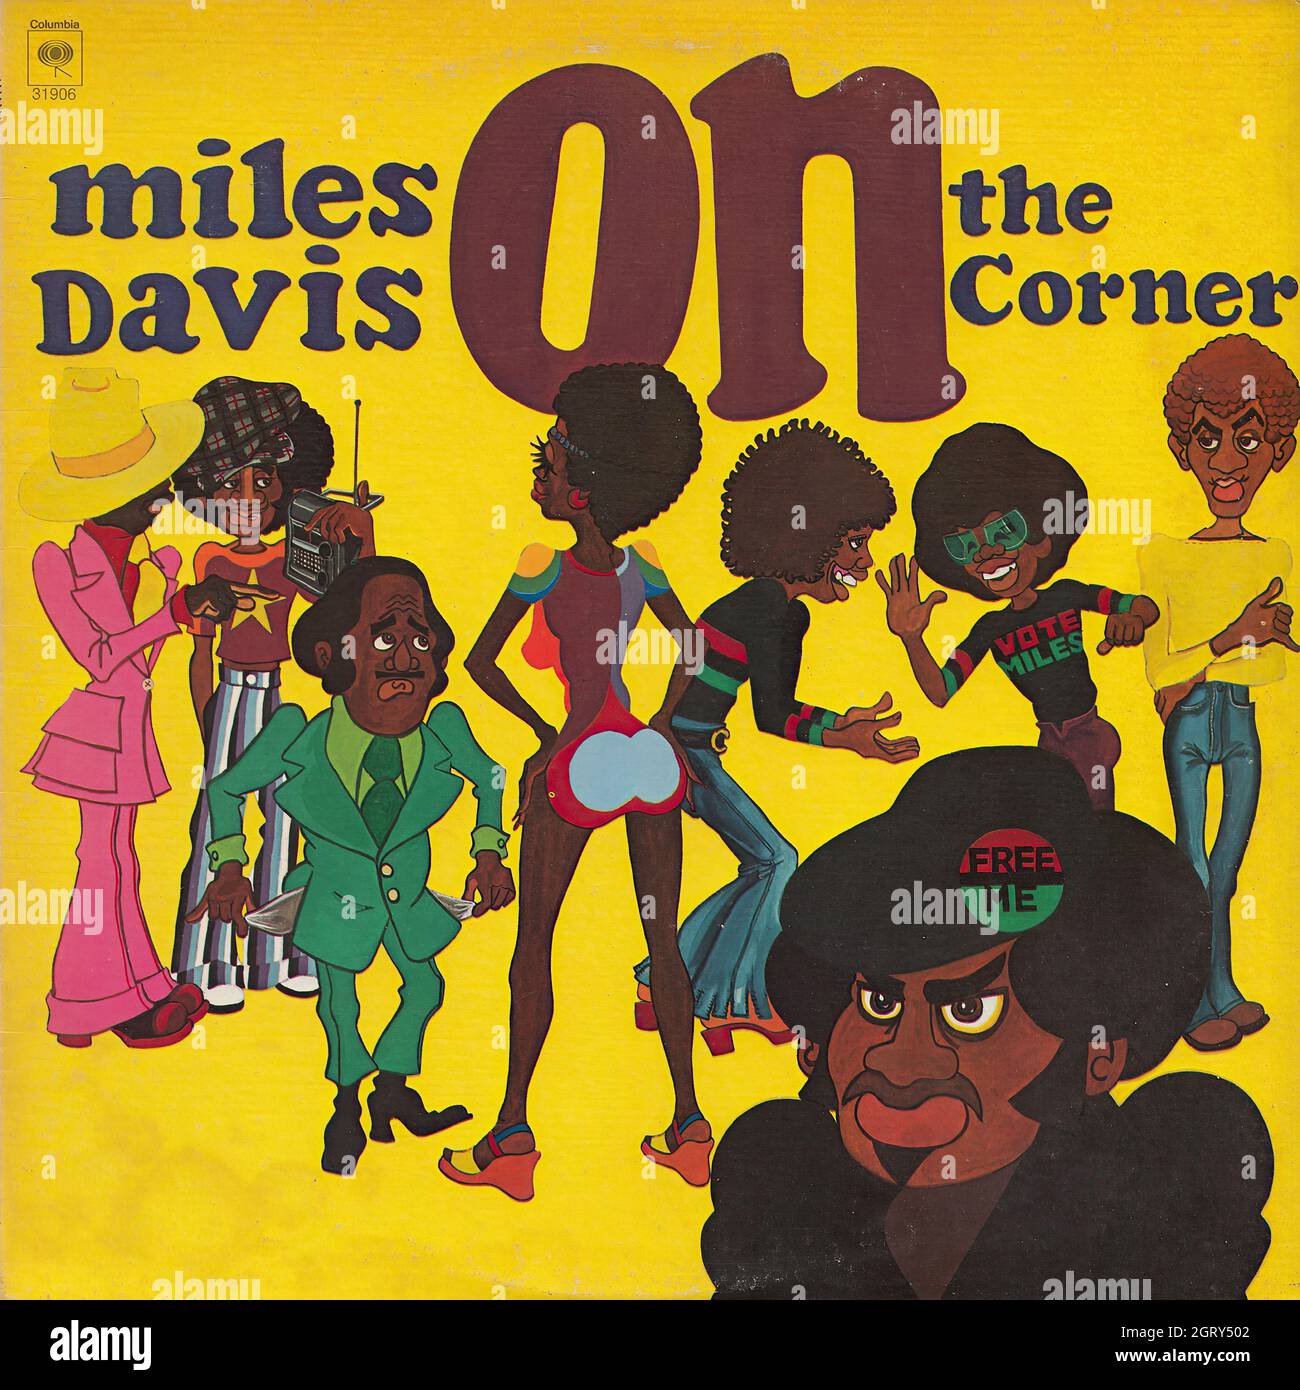 Miles Davis - On the corner - Vintage Vinyl Record Cover Stock Photo